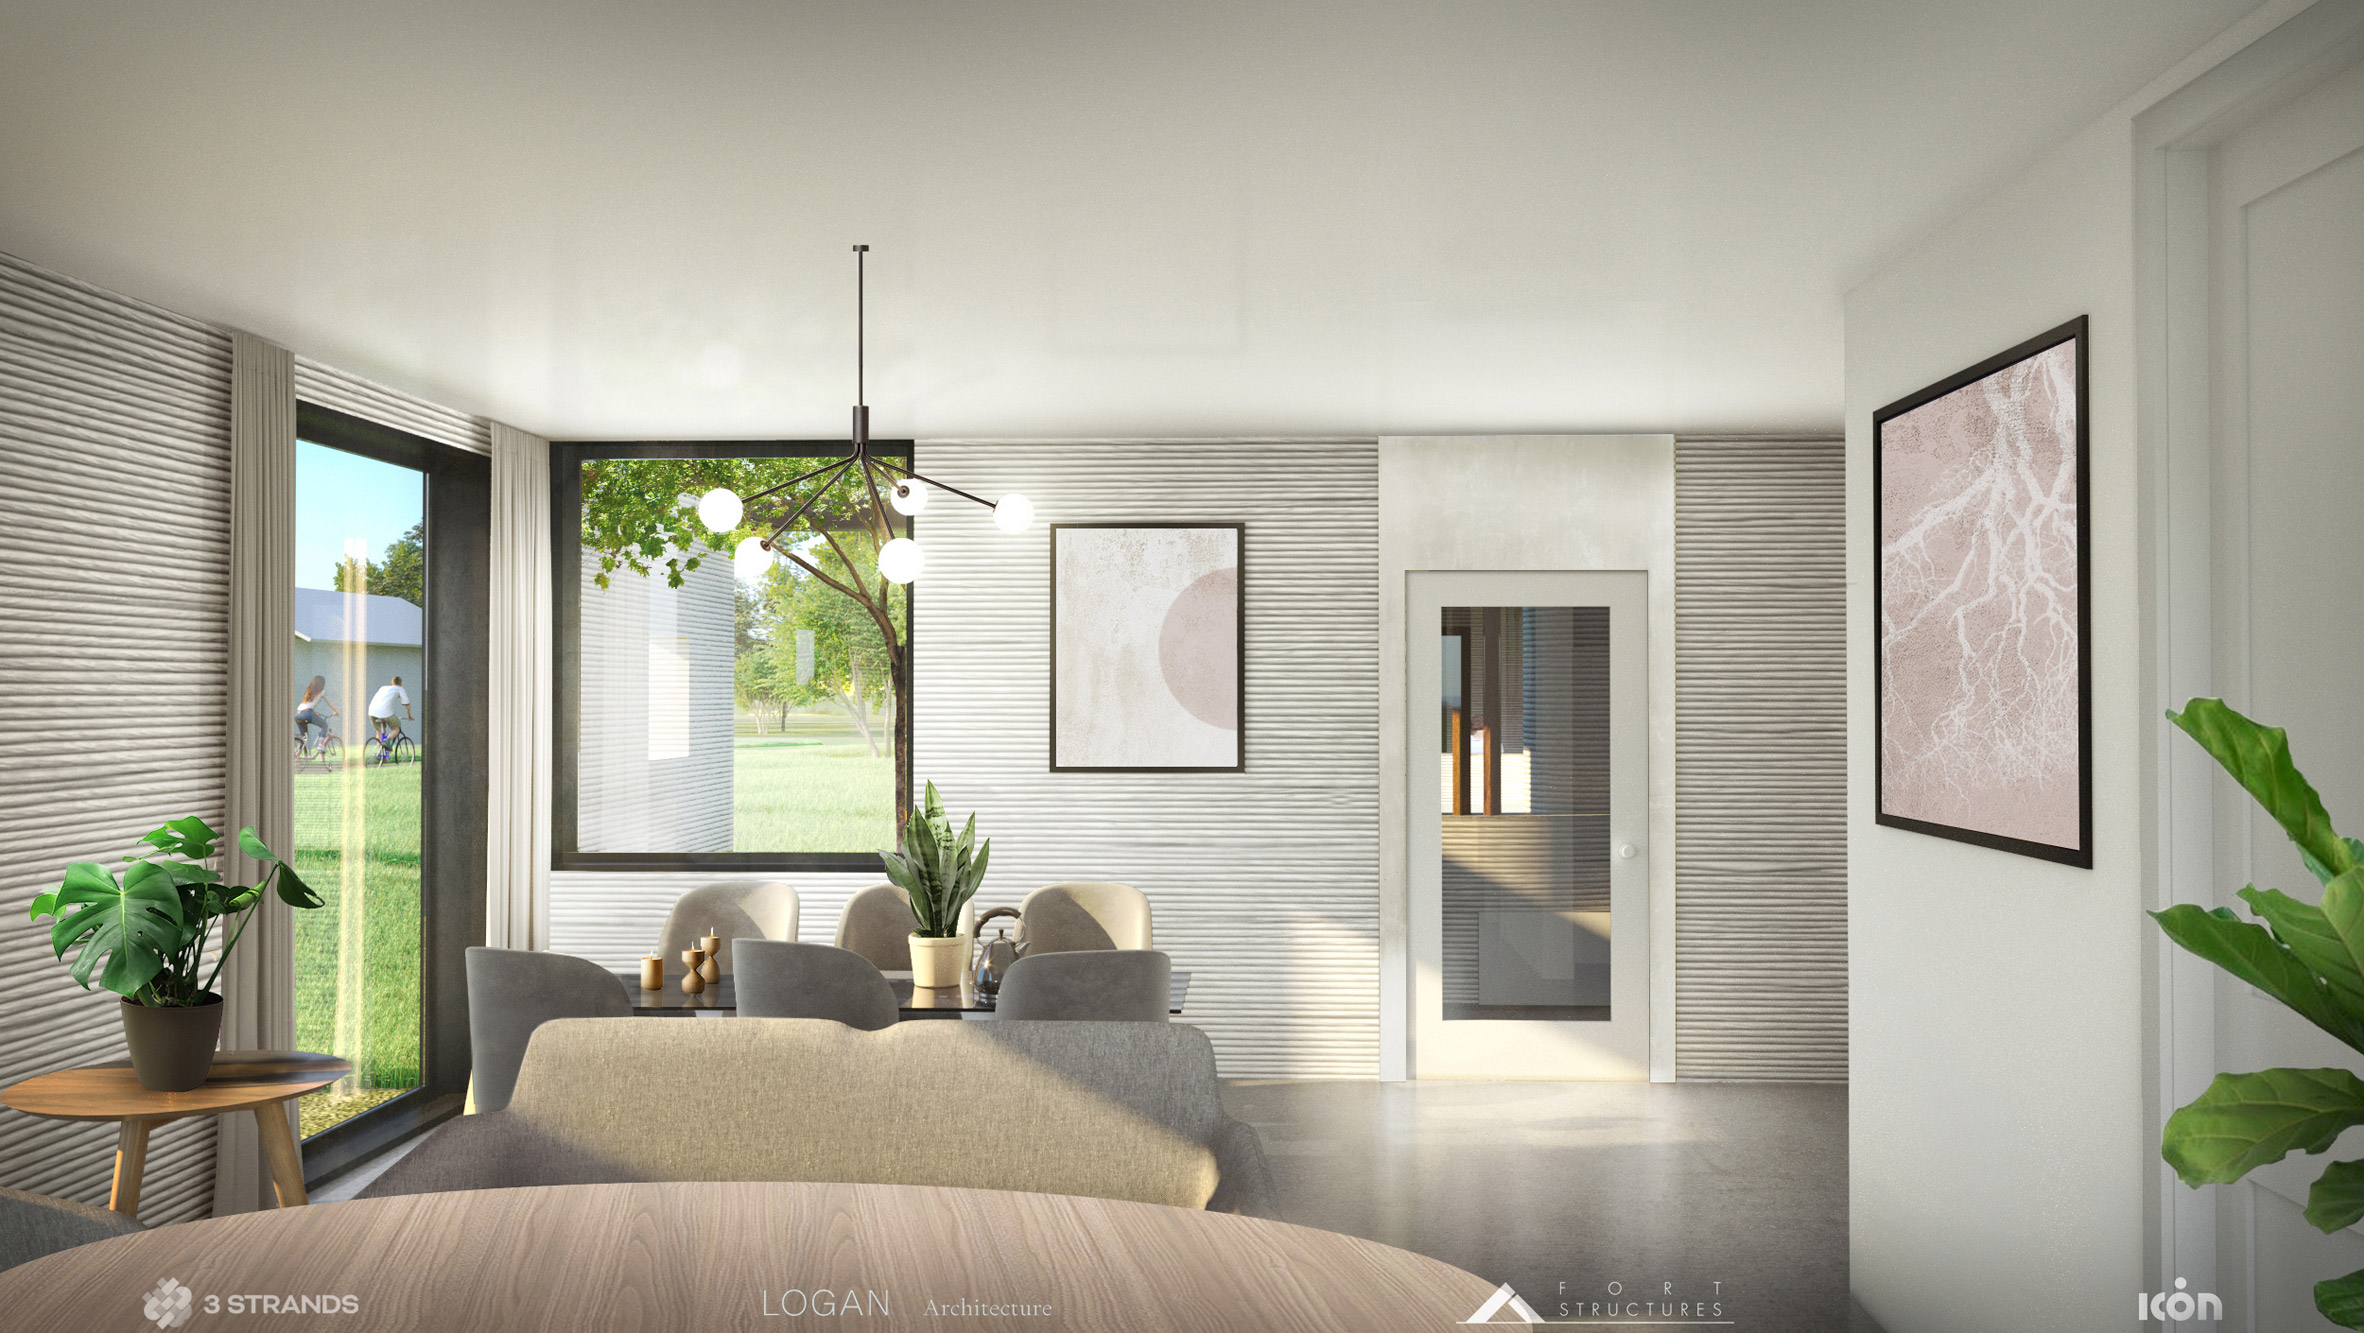 Austin-based designer Claire Zinnecker designed each house's neutral interiors